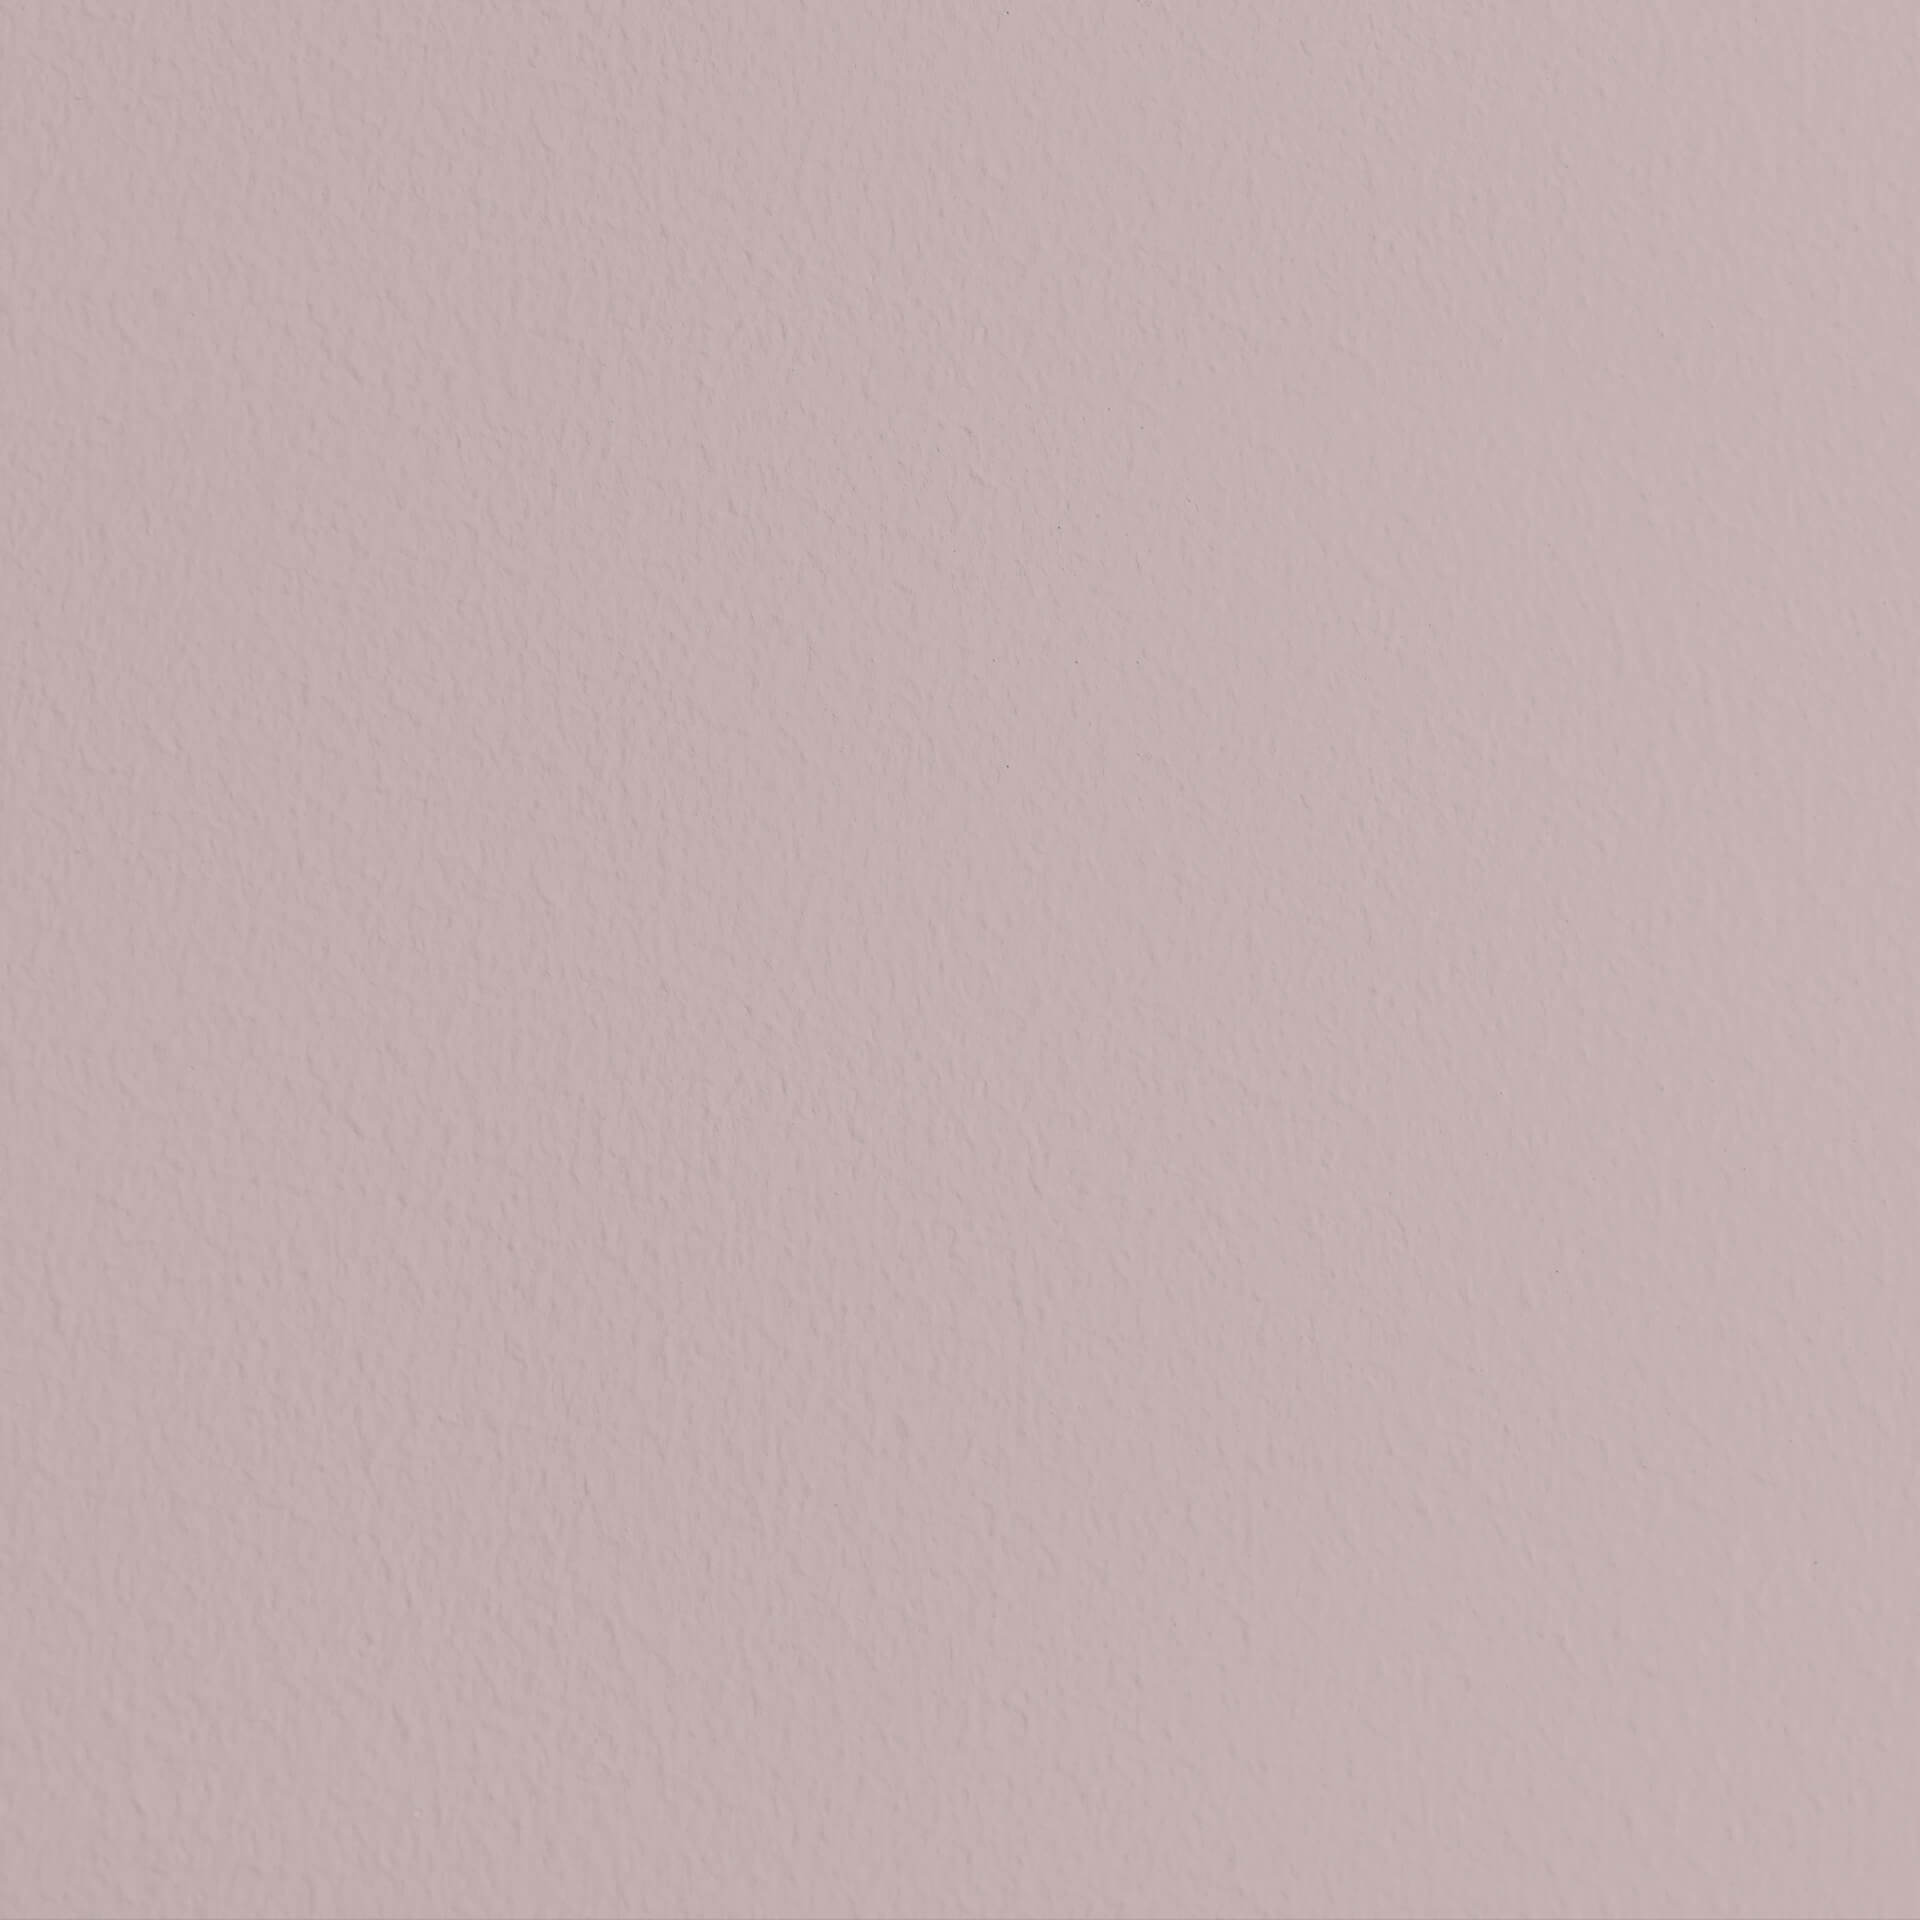 Mylands Pale Lilac No. 246 - Marble Matt Emulsion / Wandfarbe, 1L